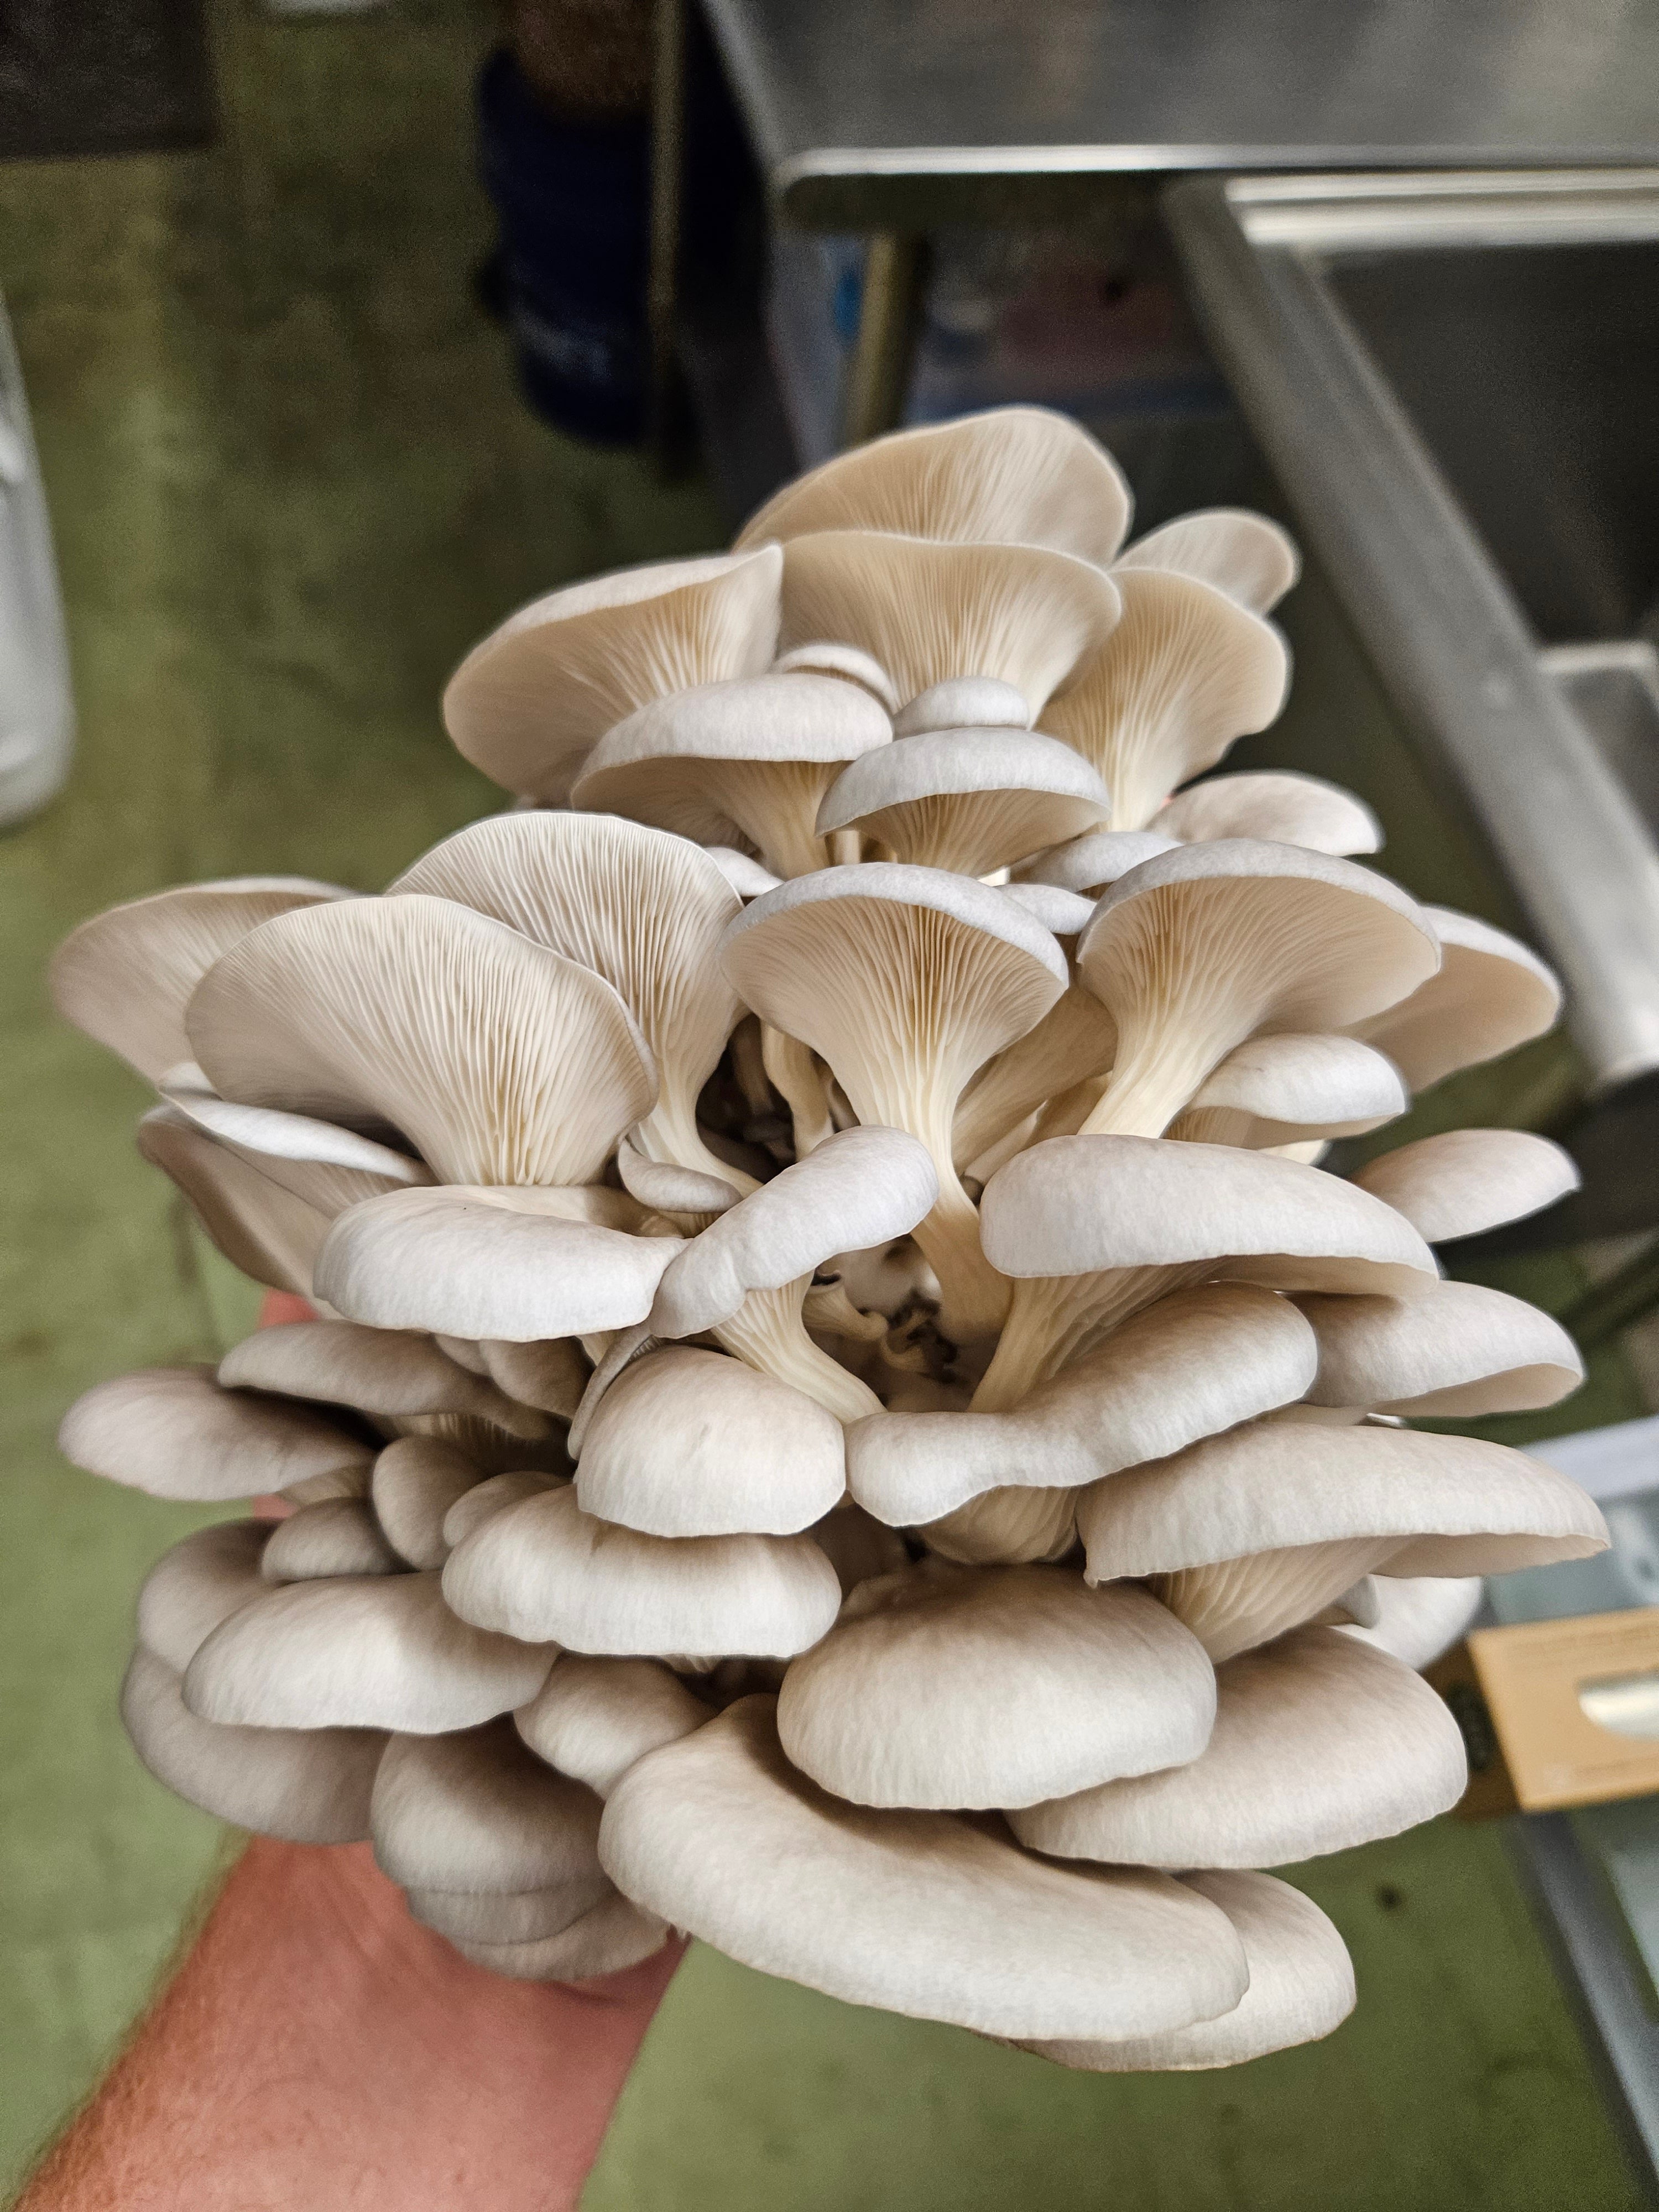 U.S.D.A. Organic Oyster Mushrooms (Fresh)